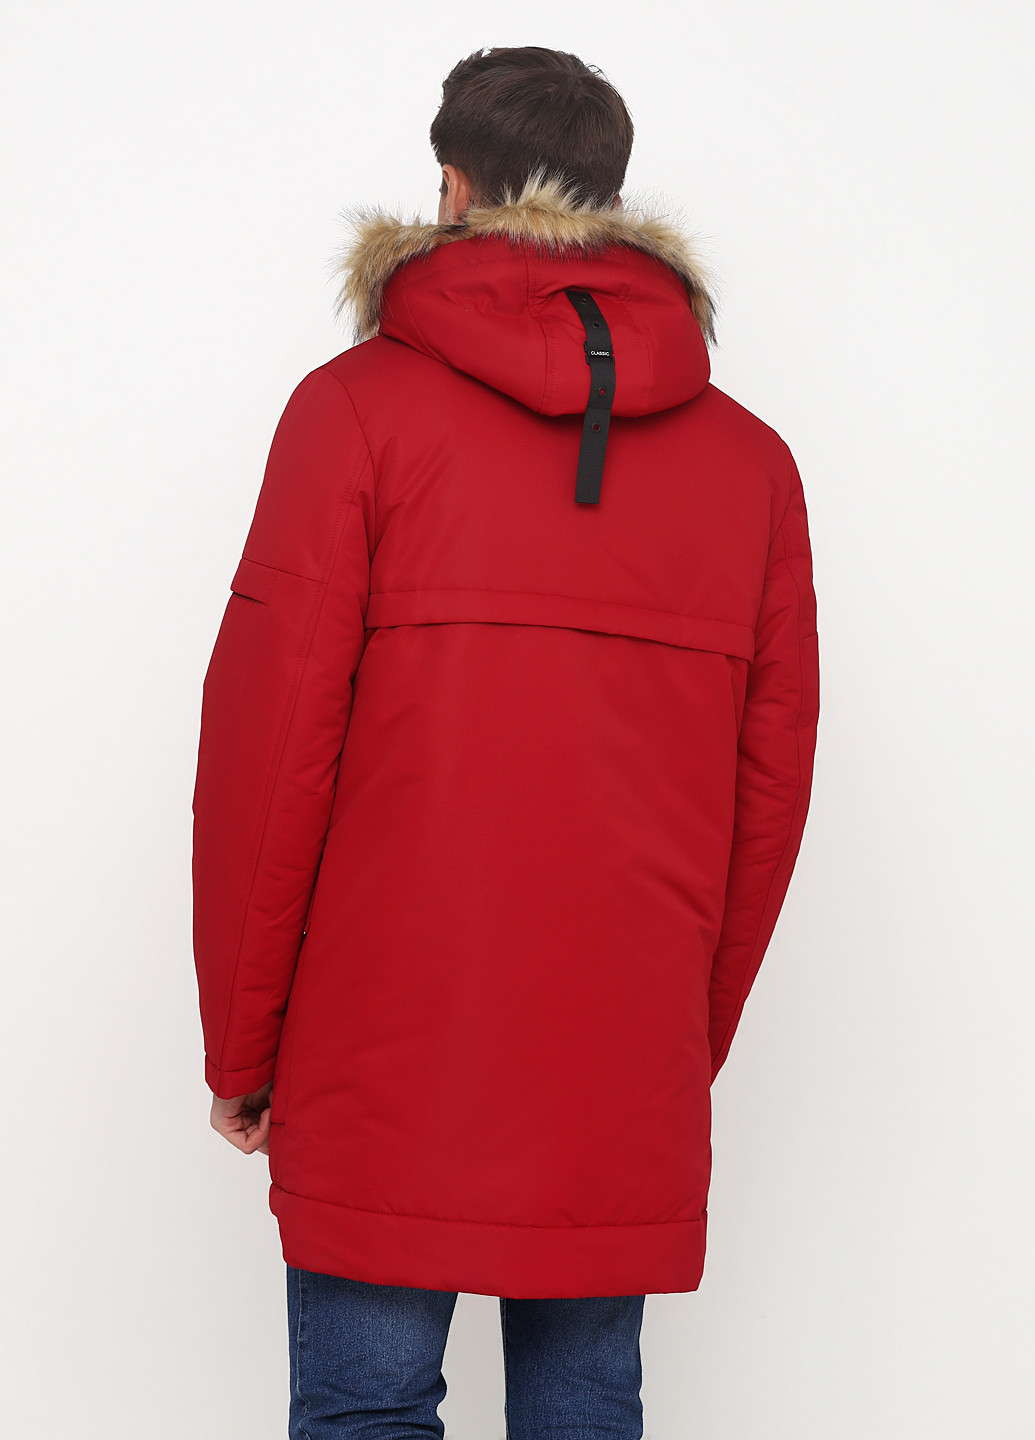 Темно-красная зимняя куртка Danstar